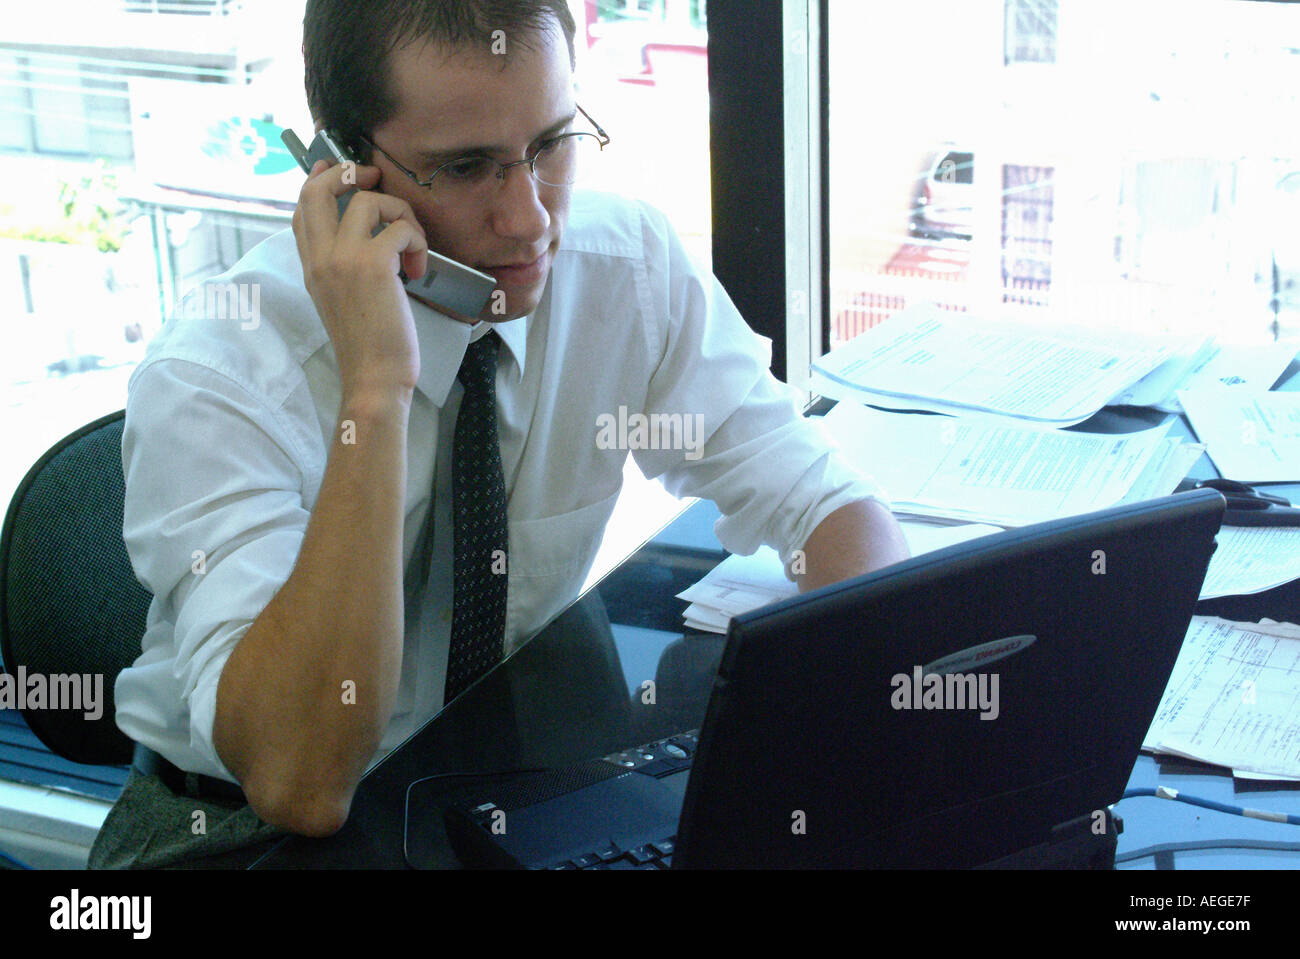 Businessman desk office laptop papers shirt tie glasses window cellphone cellular phone chair people communication business conc Stock Photo